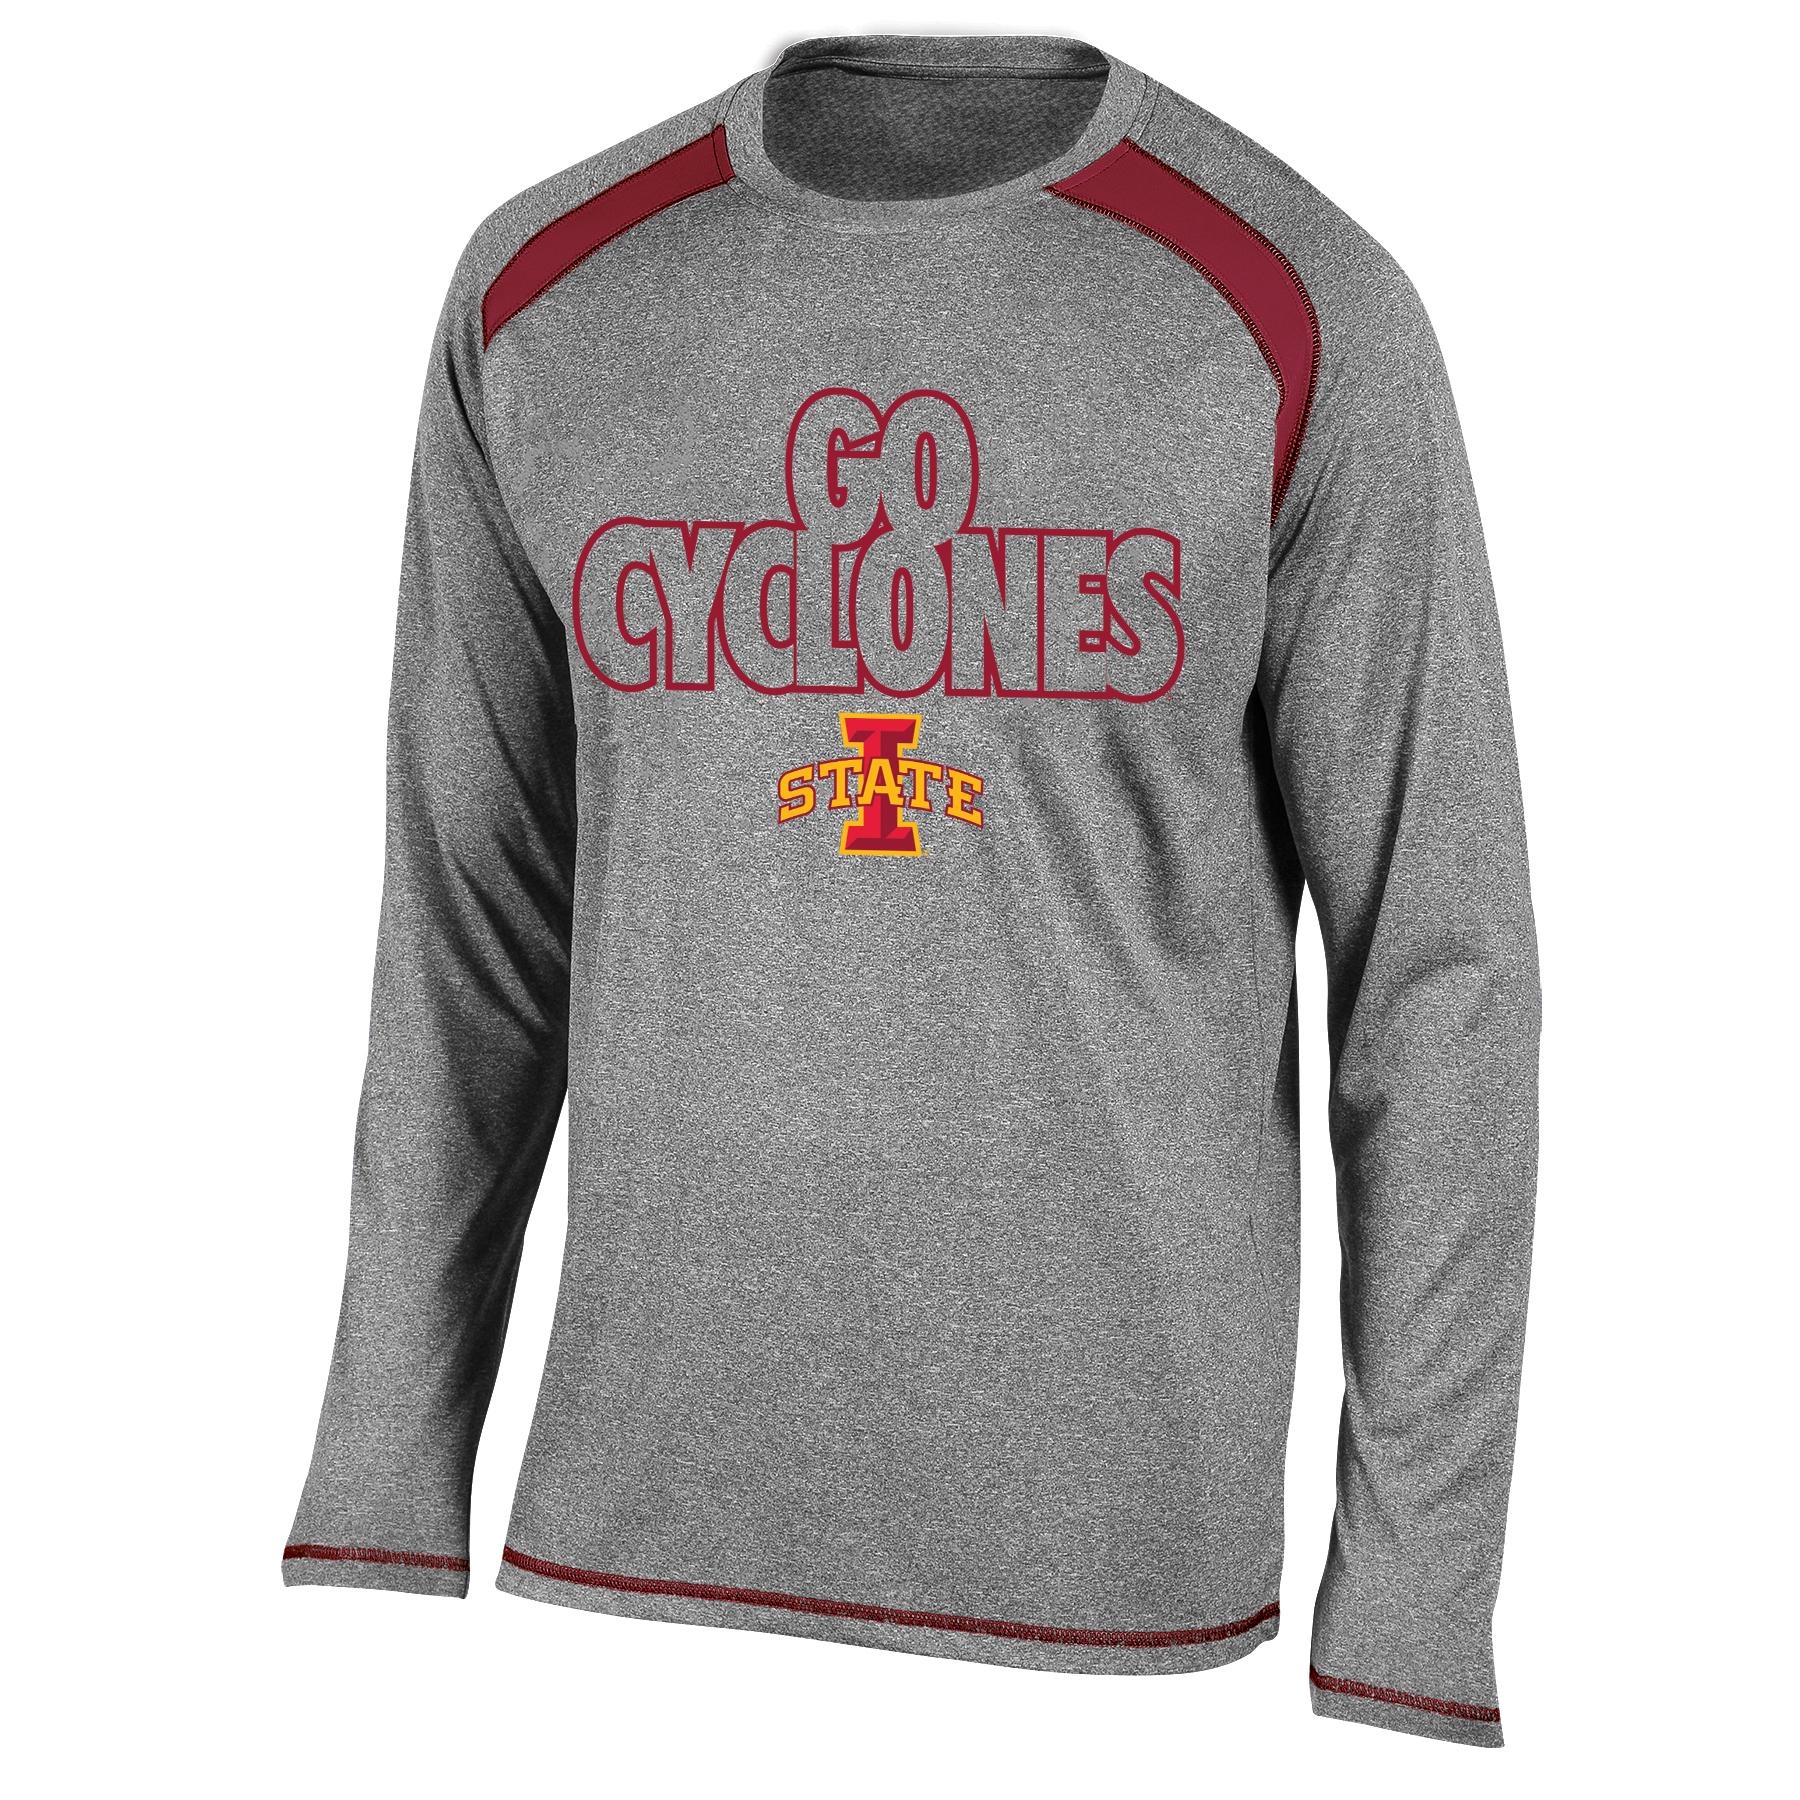 NCAA Men's Big & Tall Athletic Shirt - Iowa State University Cyclones